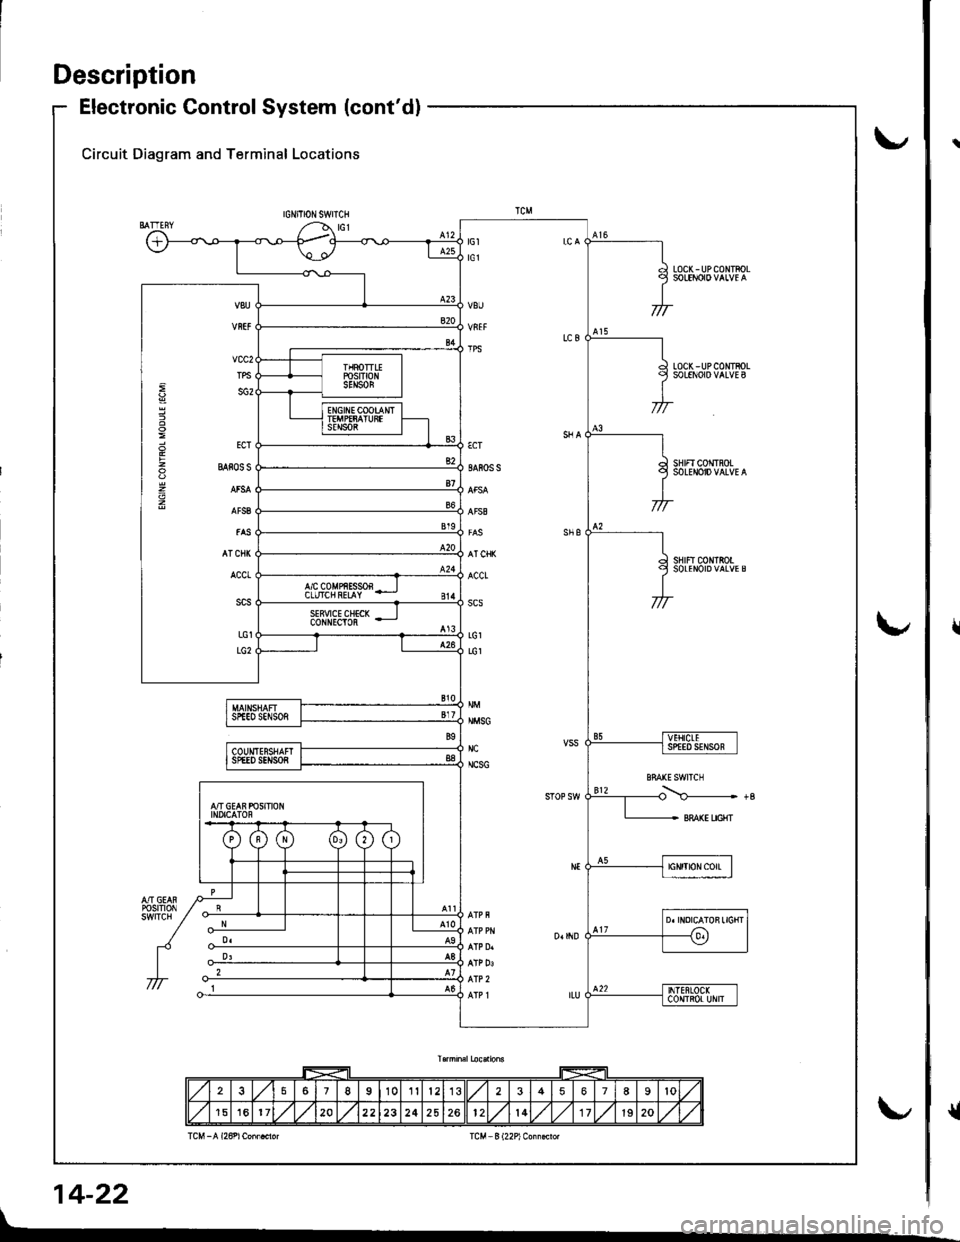 HONDA INTEGRA 1998 4.G Workshop Manual Description
Electronic Control System (contd)
Circuit Diagram and Terminal Locations
IGNITIONSWITCH
LOC(-UPCONTFOL
LOCK - UP COIITBOLSOLENOIO VALVE B
SHIFI CONTROLSOLENOID VALVE A
sHrFtc0NtRotSOLENOI